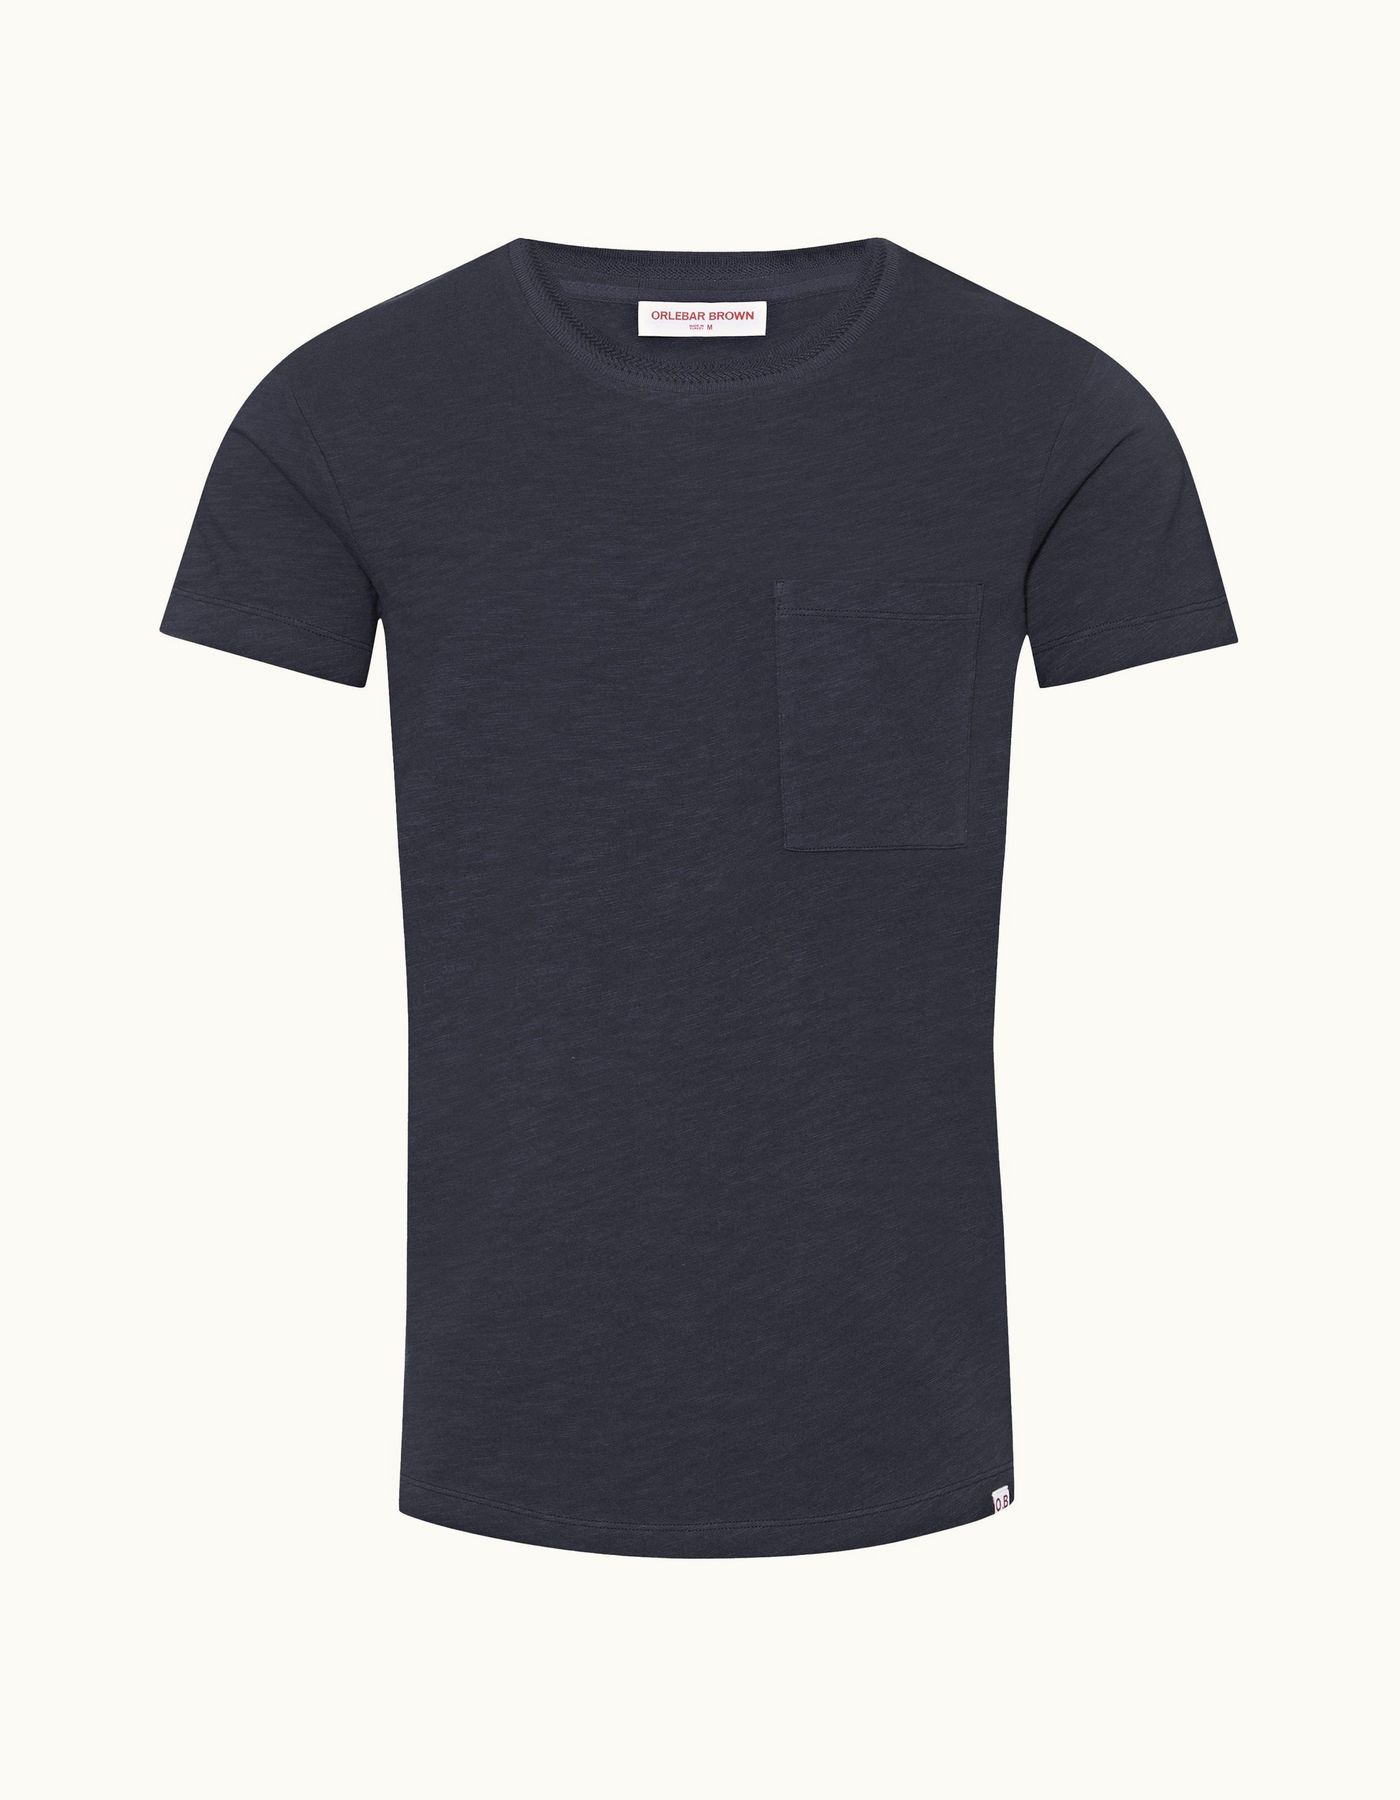 Ob Classic - Mens Night Iris Classic Fit Garment-Dye Organic Cotton T-shirt